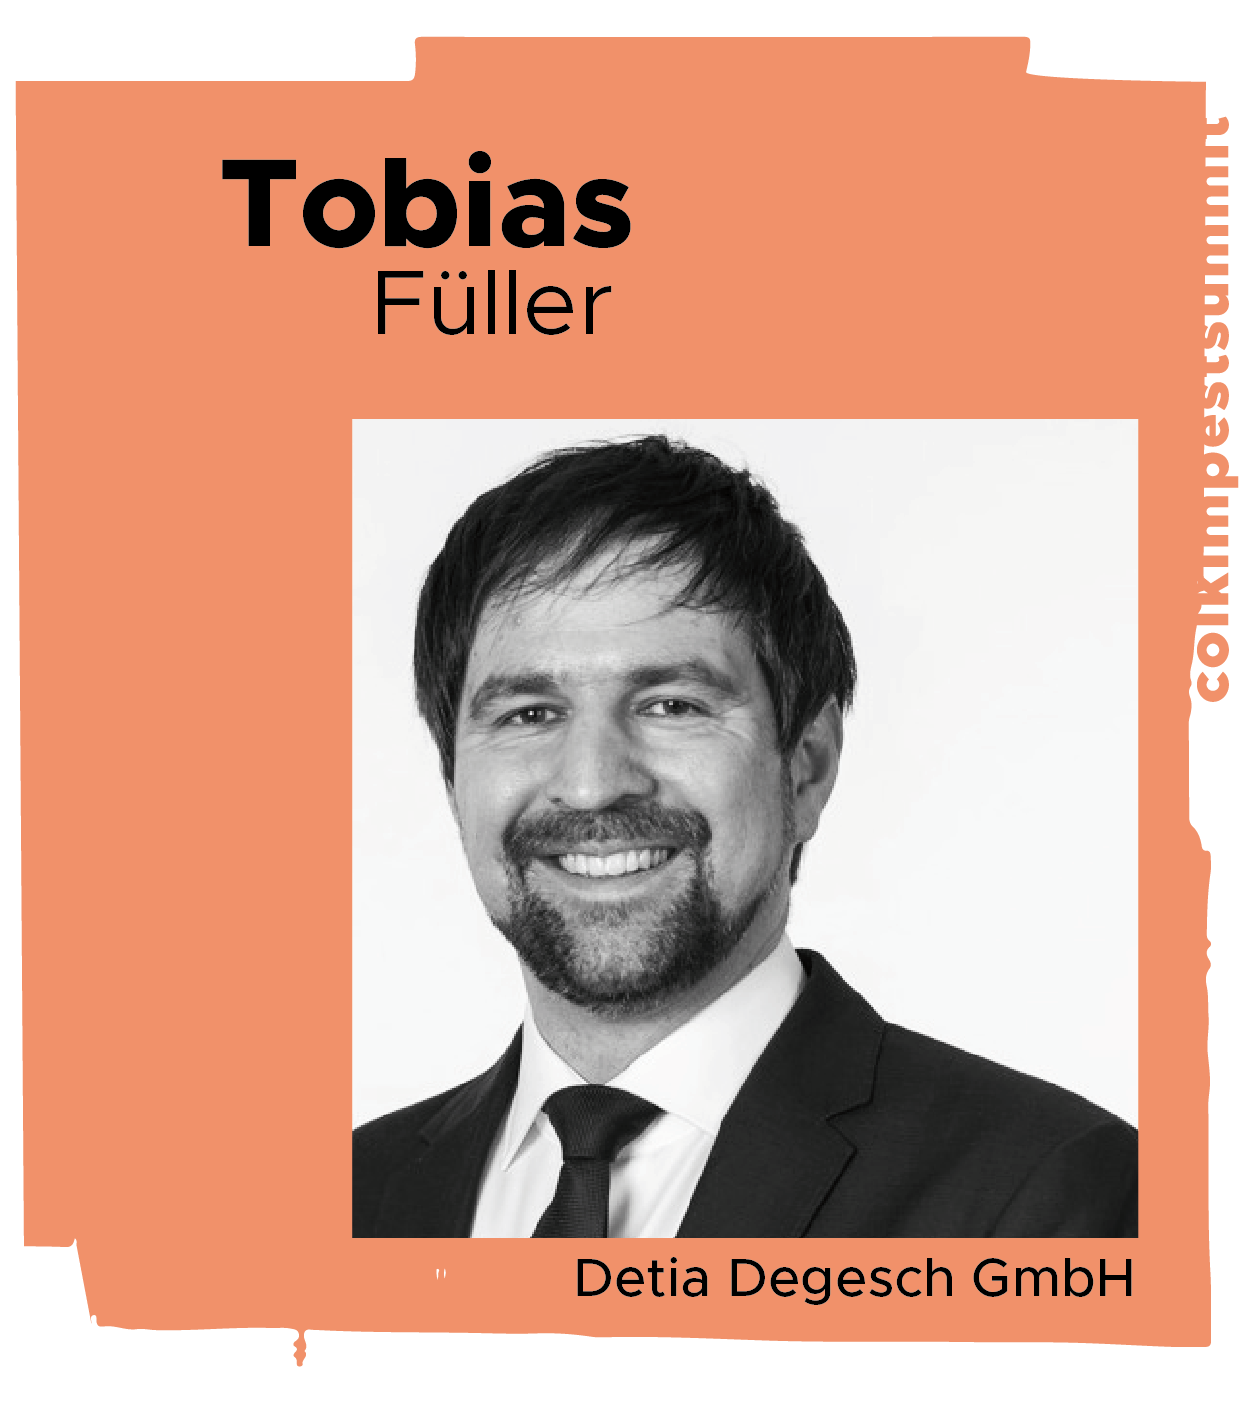 Tobias Füller-Area Sales Manager - Detia Degesch